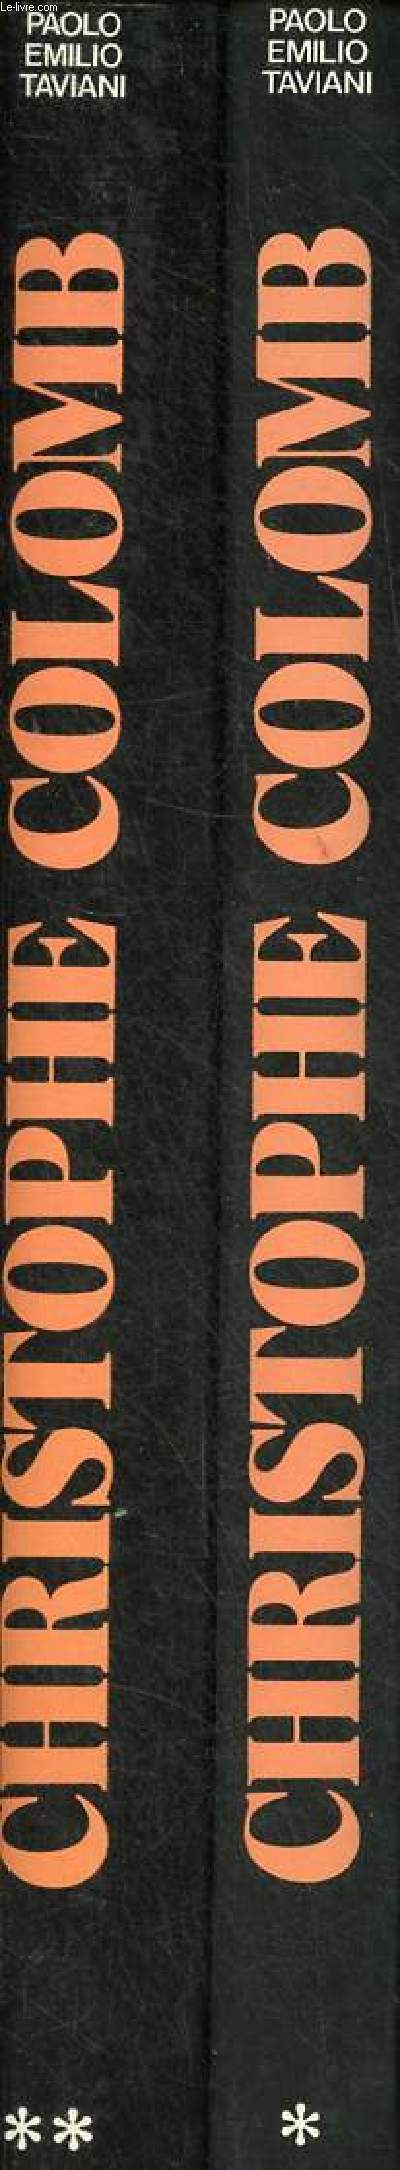 Christophe Colomb gense de la grande dcouverte - Tome 1 + Tome 2 (2 volumes).